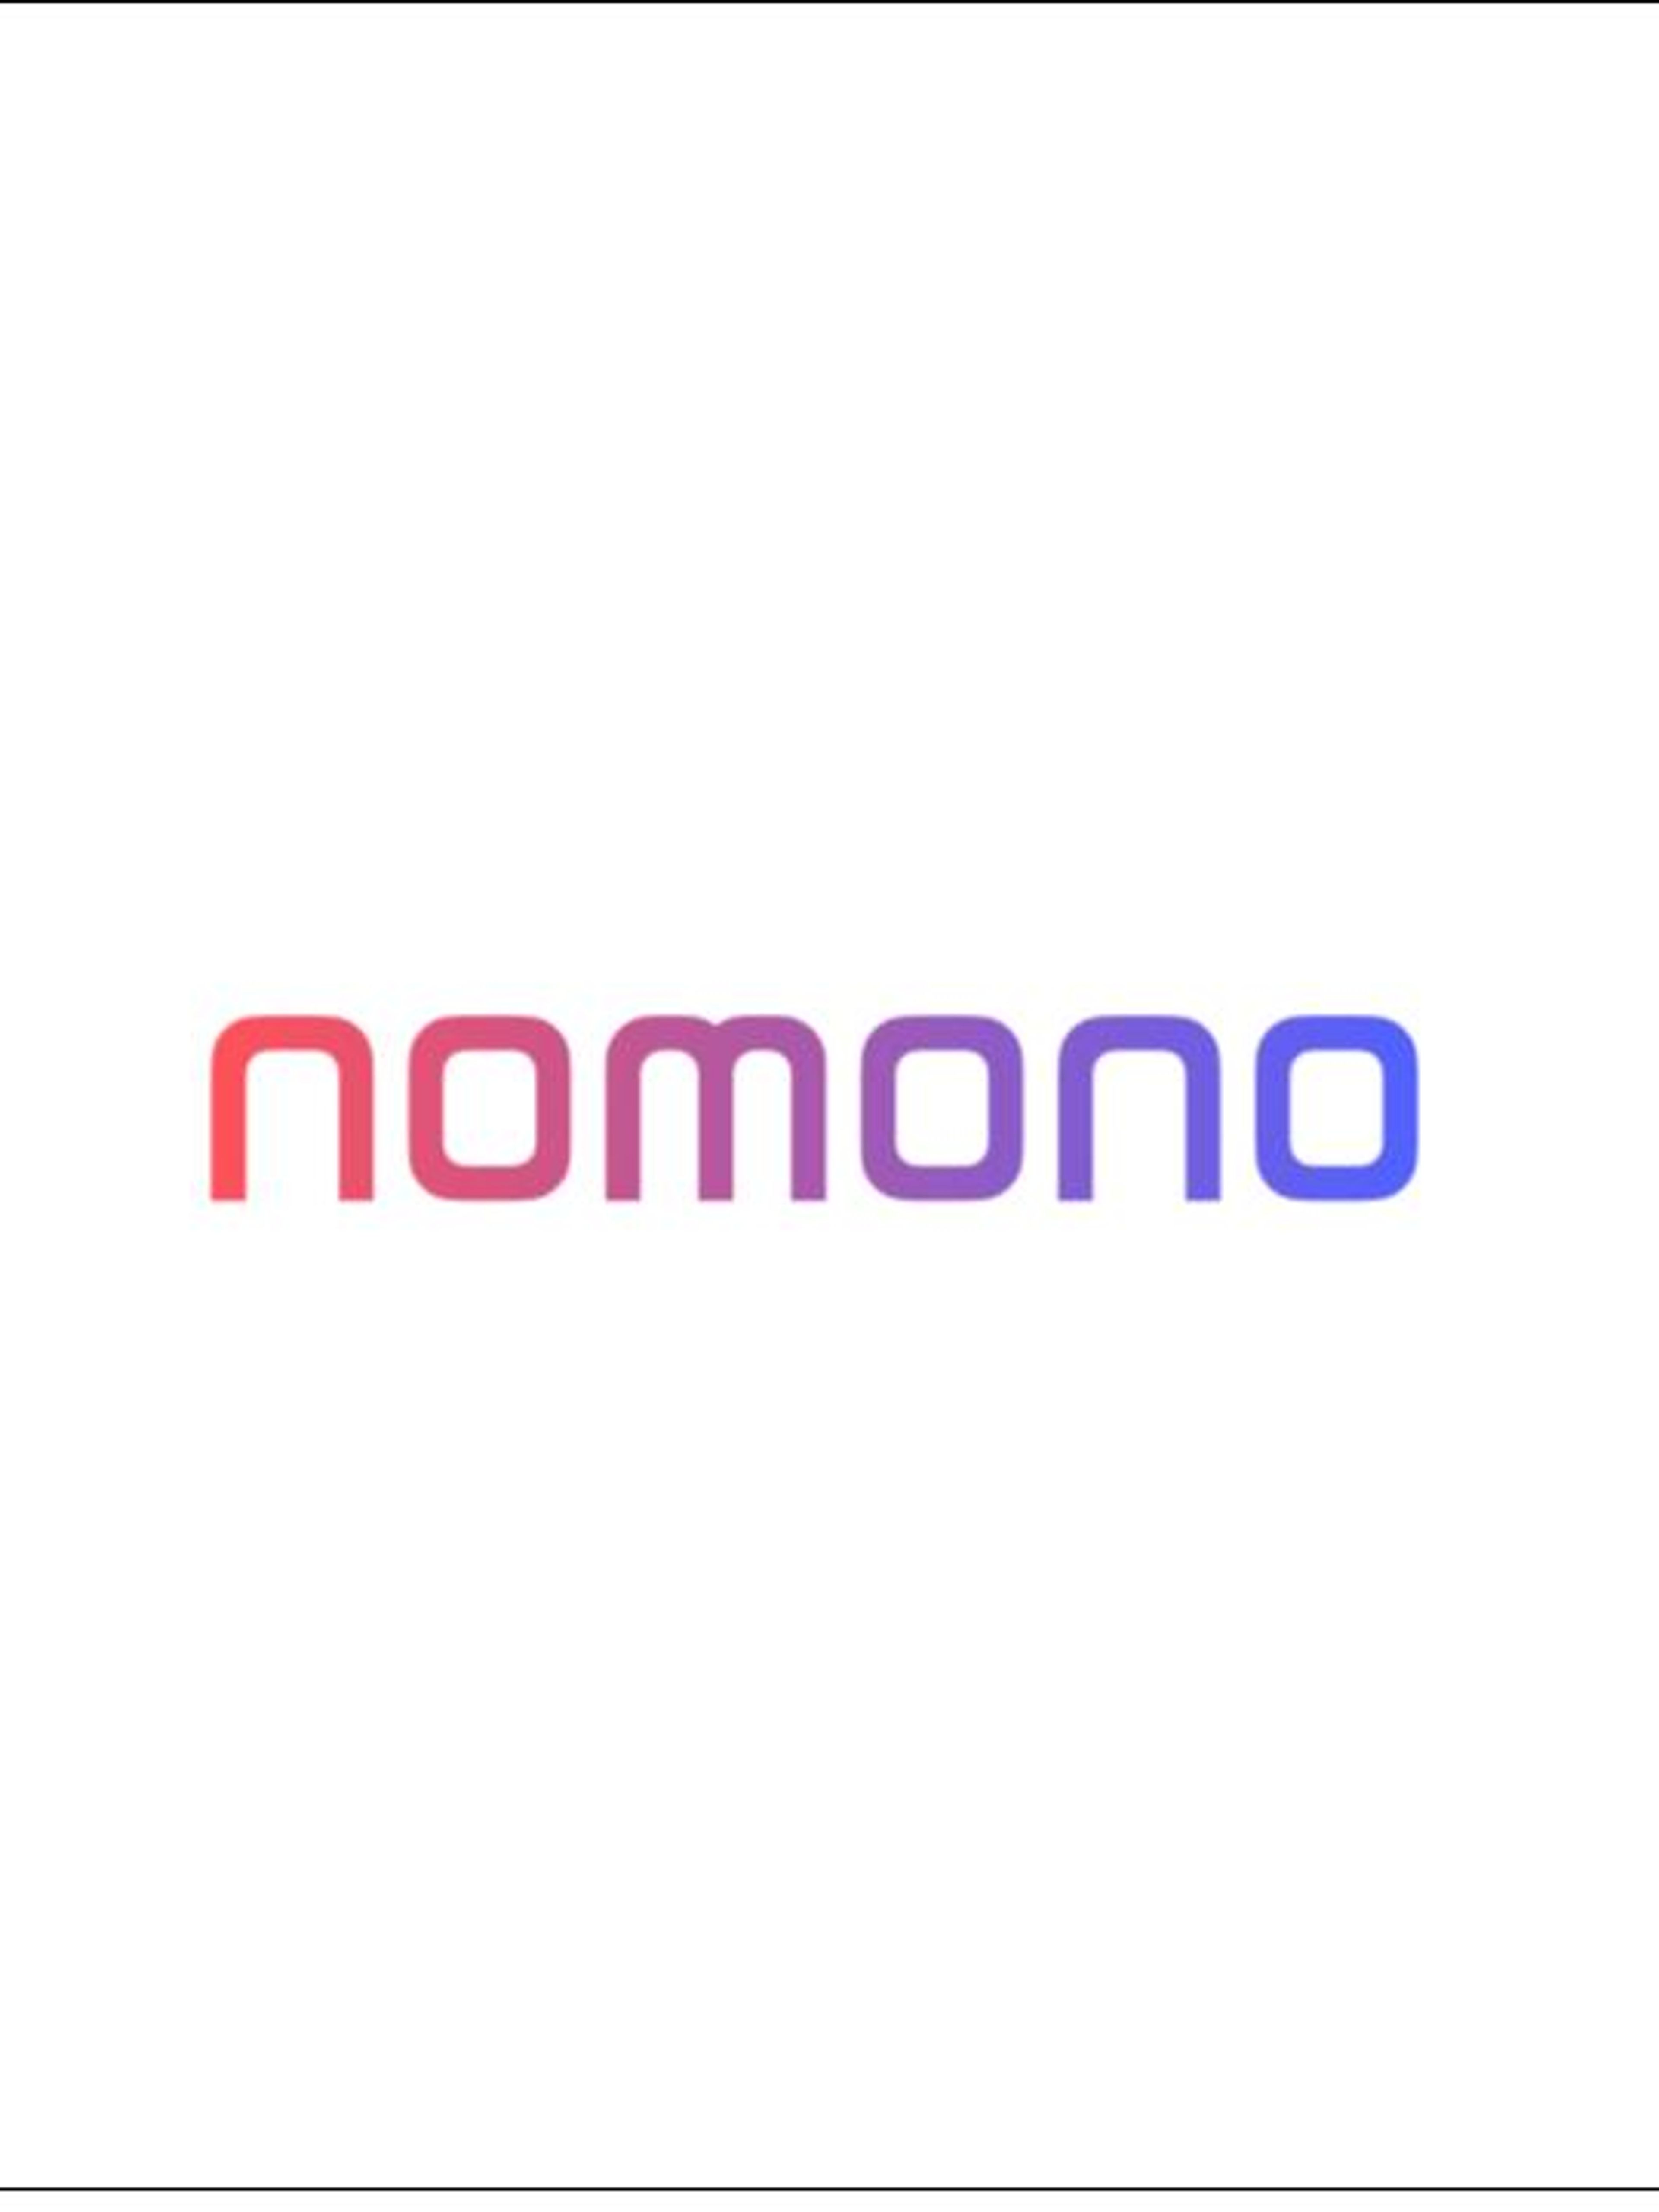 Investment funding for Norwegian spatial audio startup Nomono